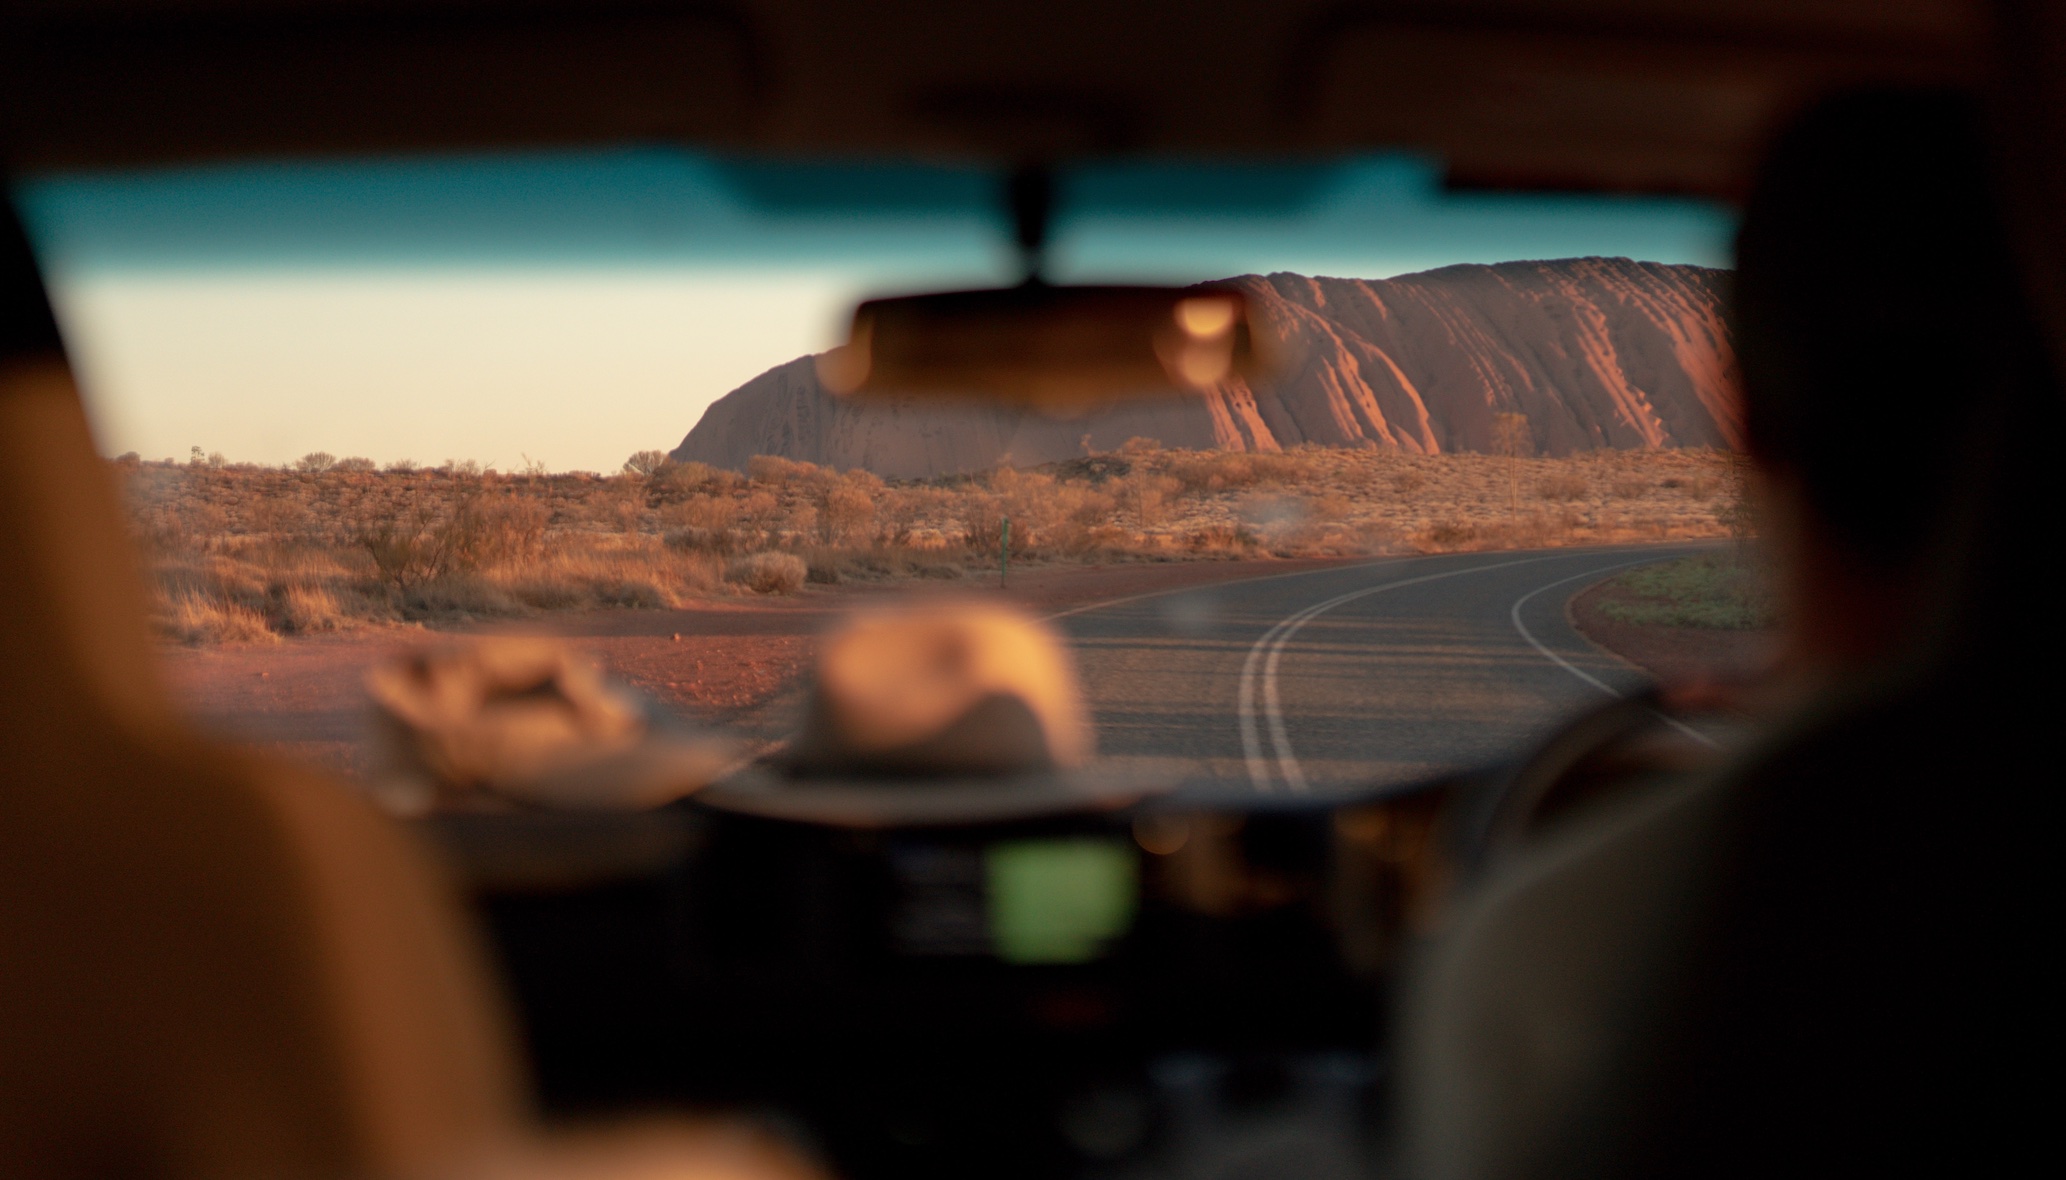 Driving to Uluru; image by Finn, via Unsplash.com.